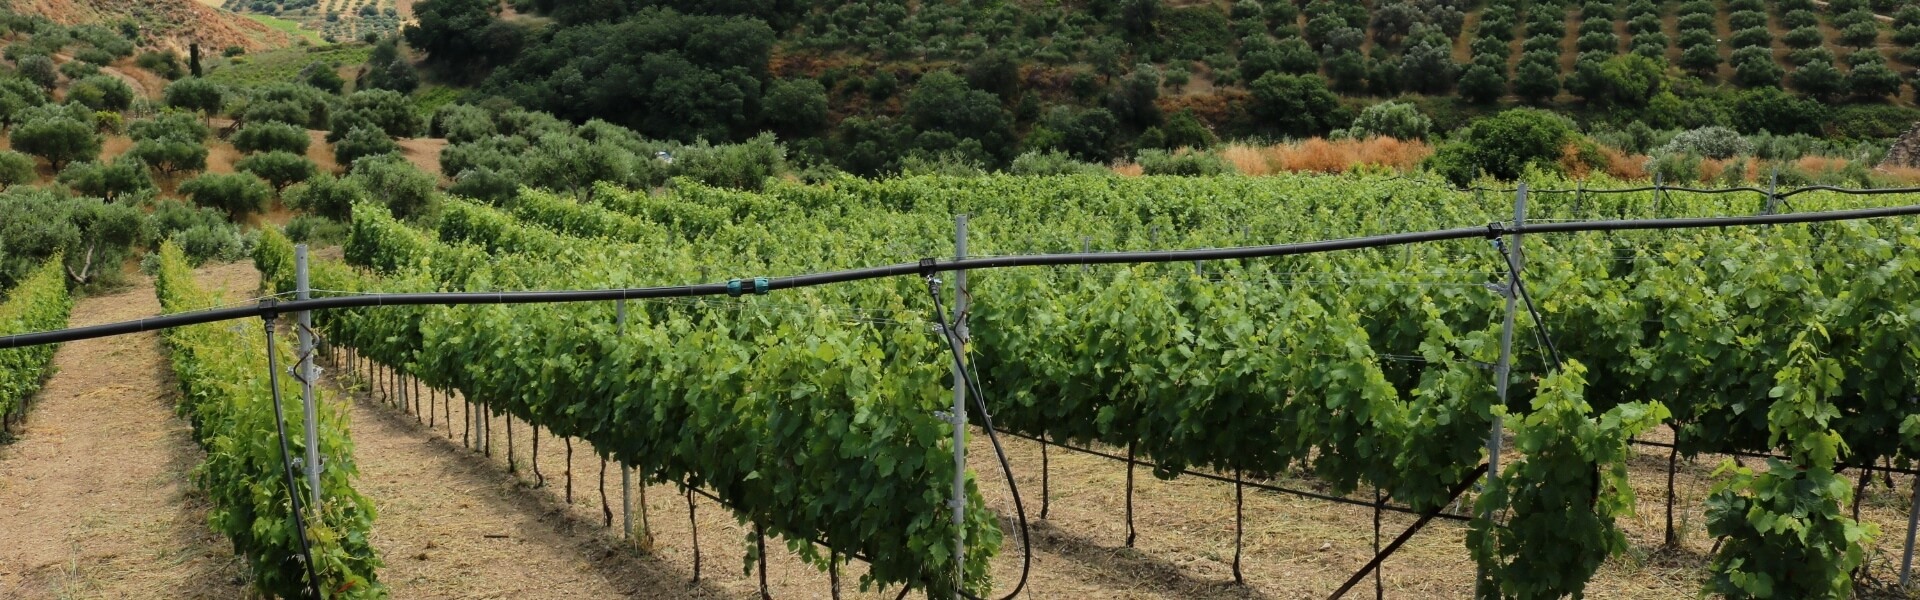 Greek Vineyards Greece